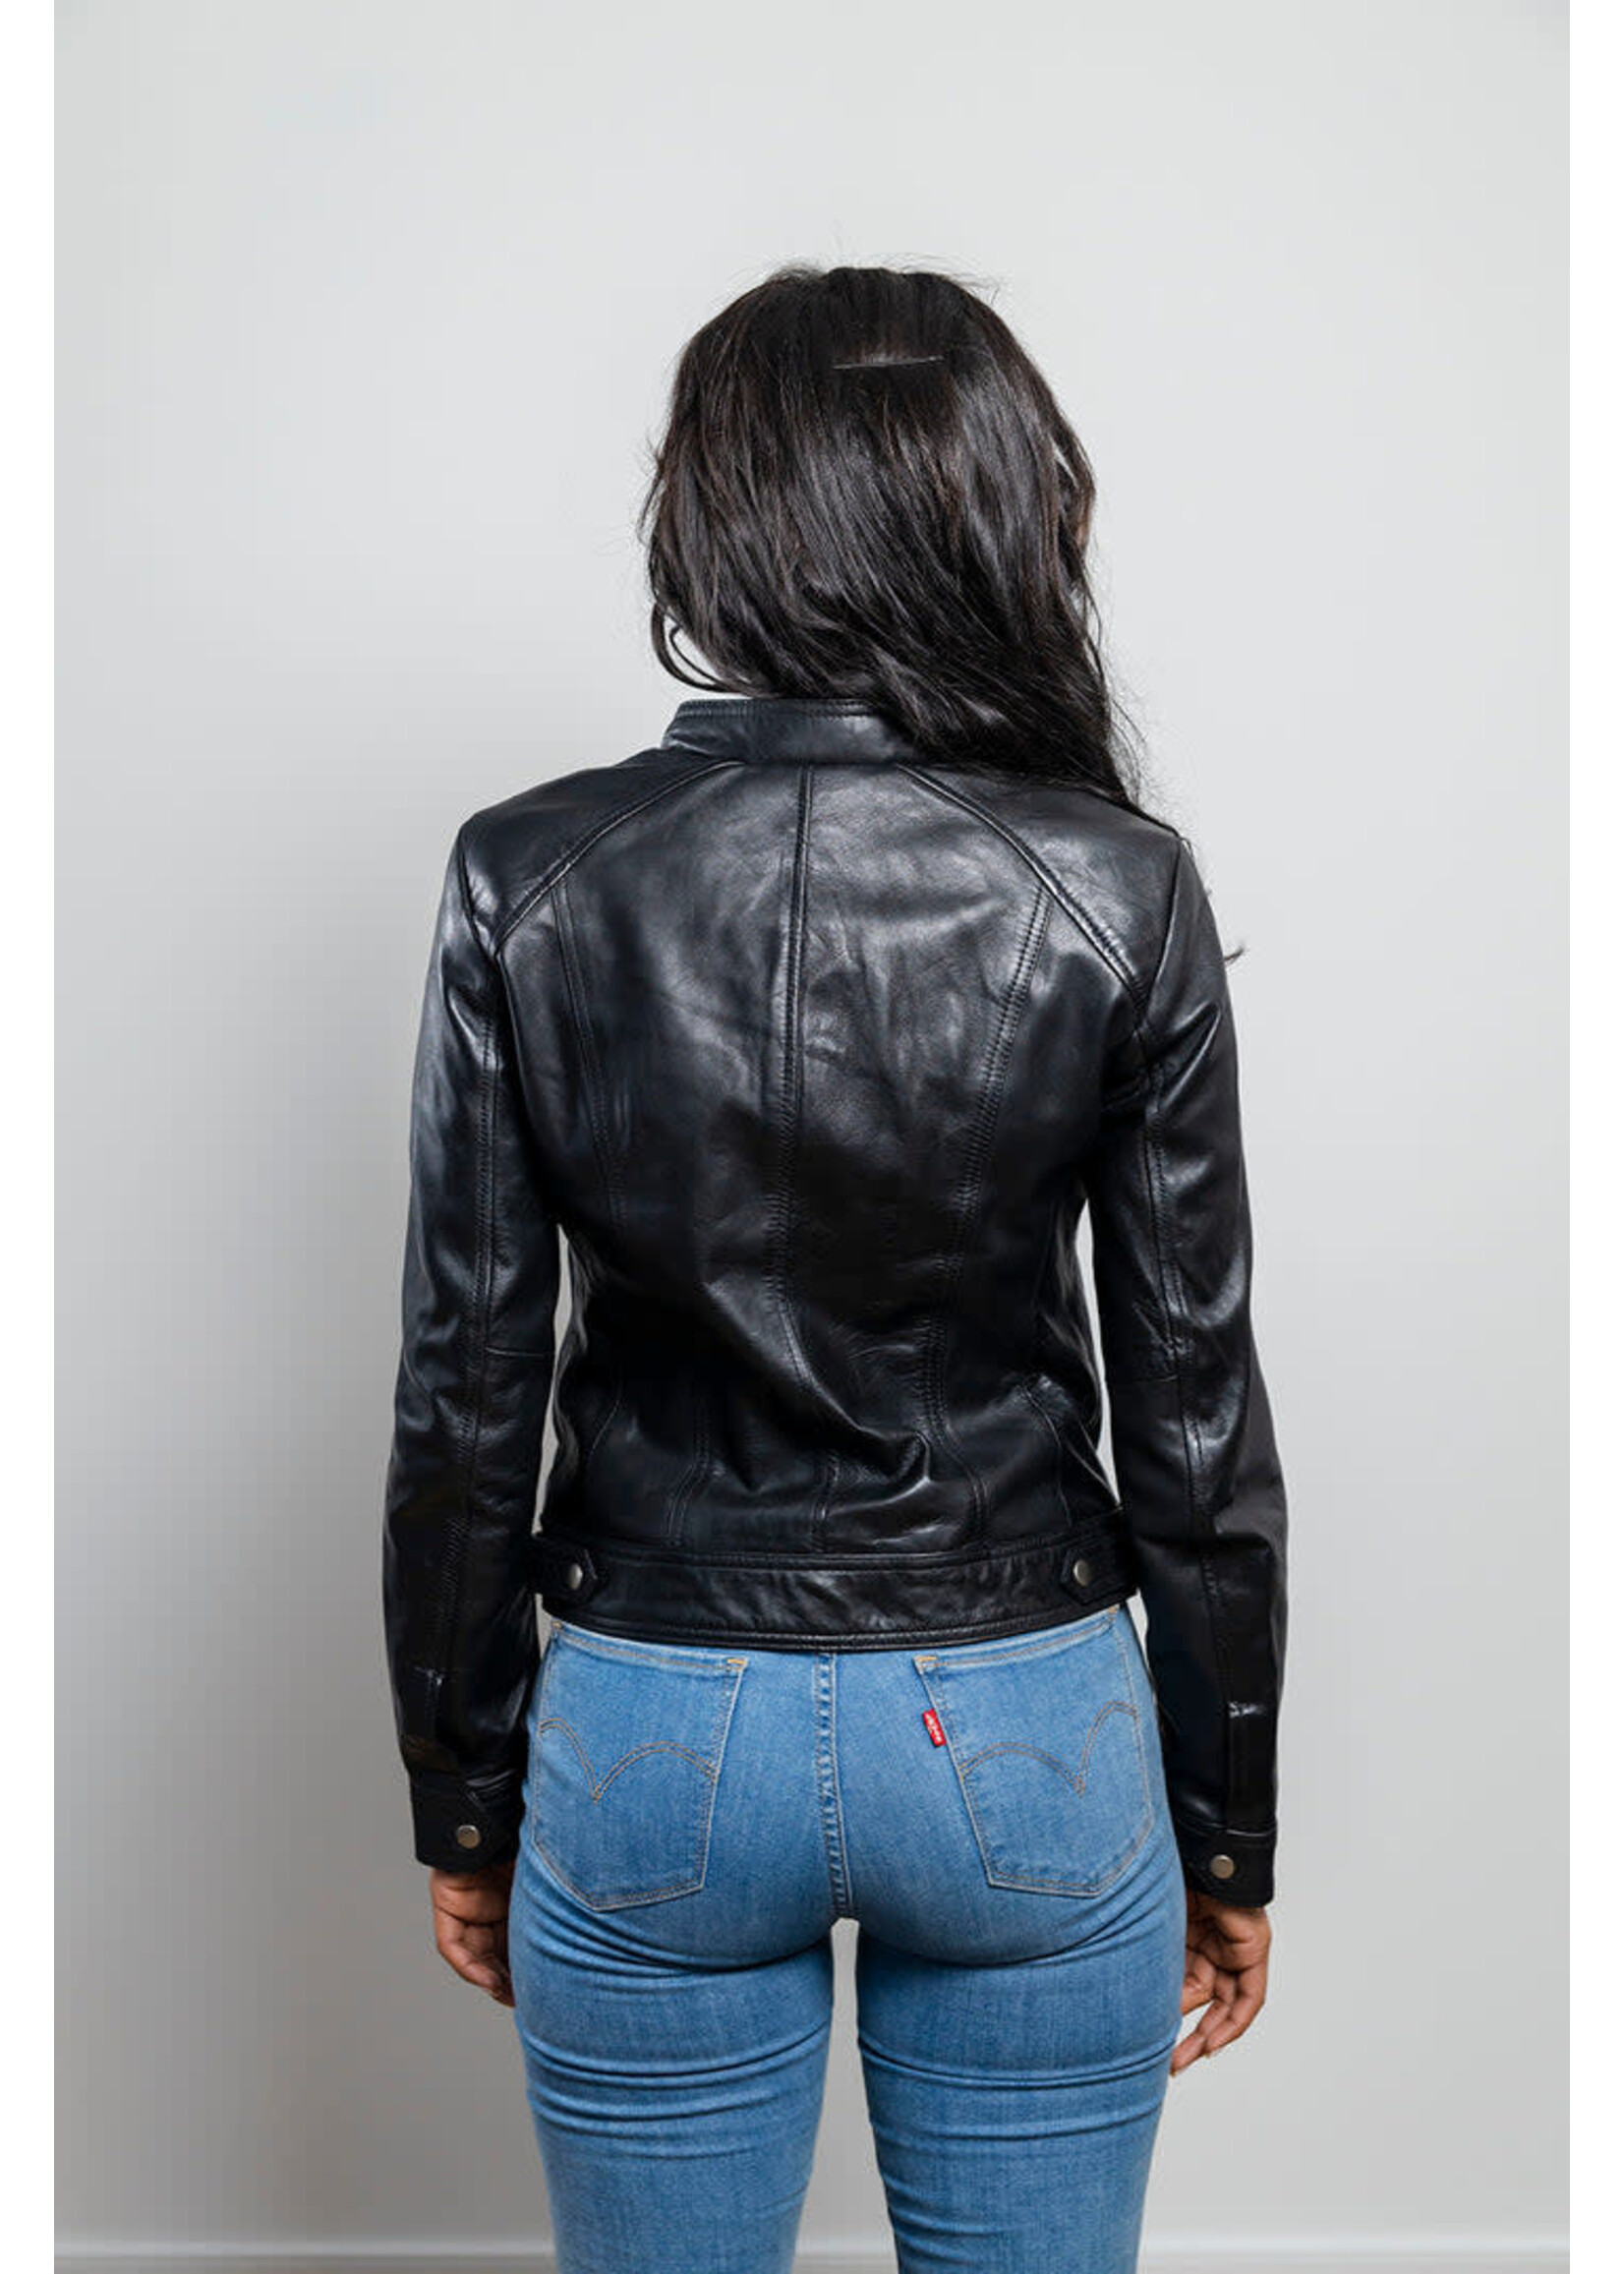 Whet Blu Favorite Black Leather Moto Jacket  50% Off Final Sale